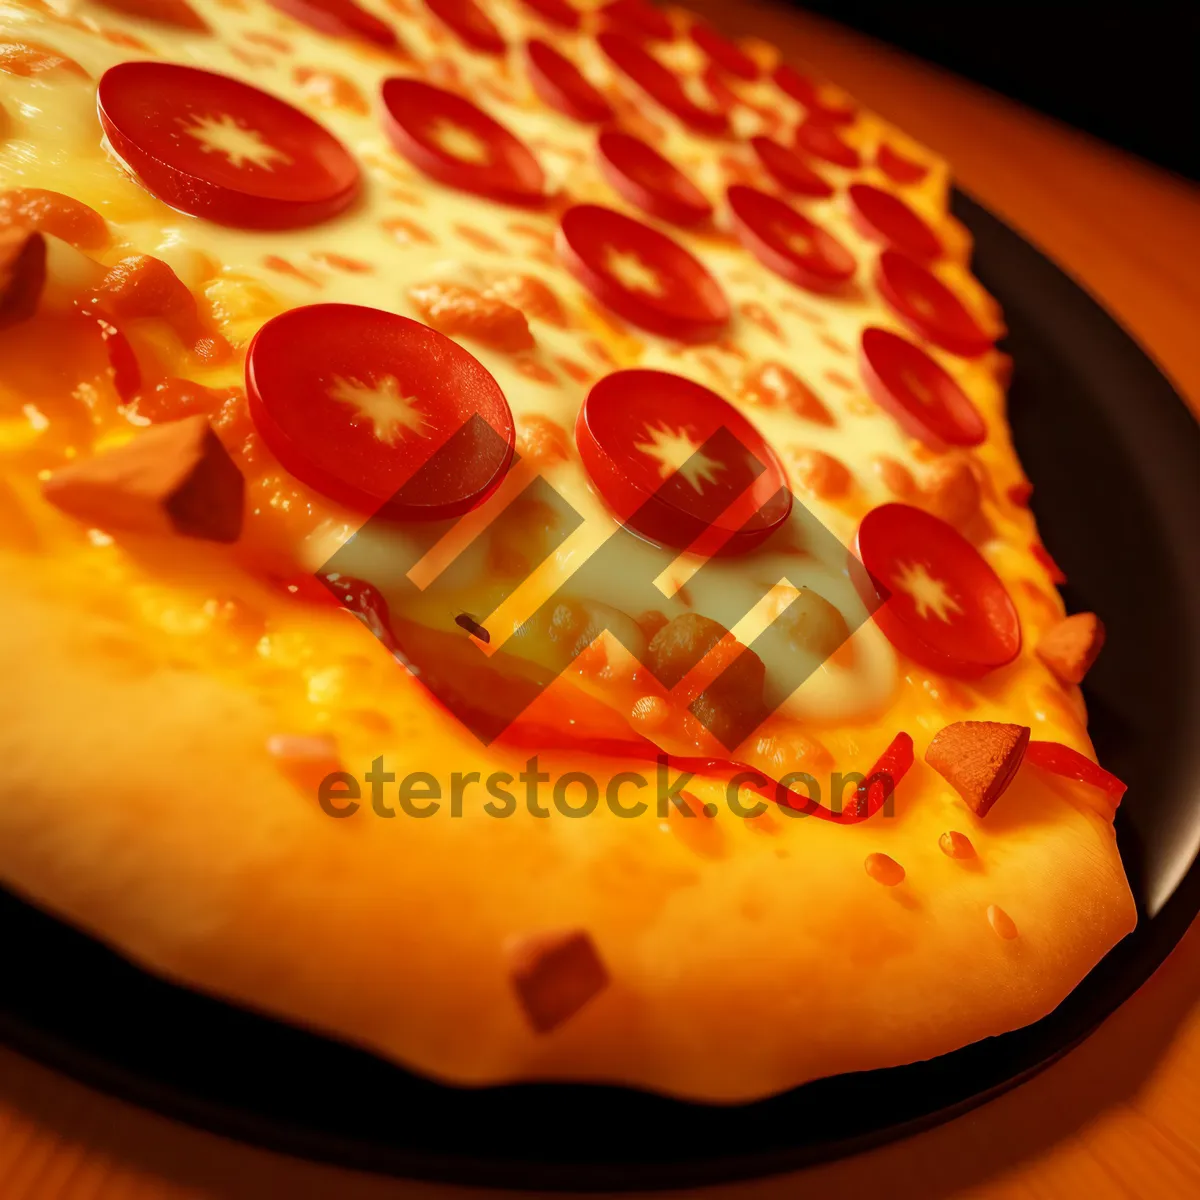 Picture of Delicious Tomato and Cheese Pizza Slice